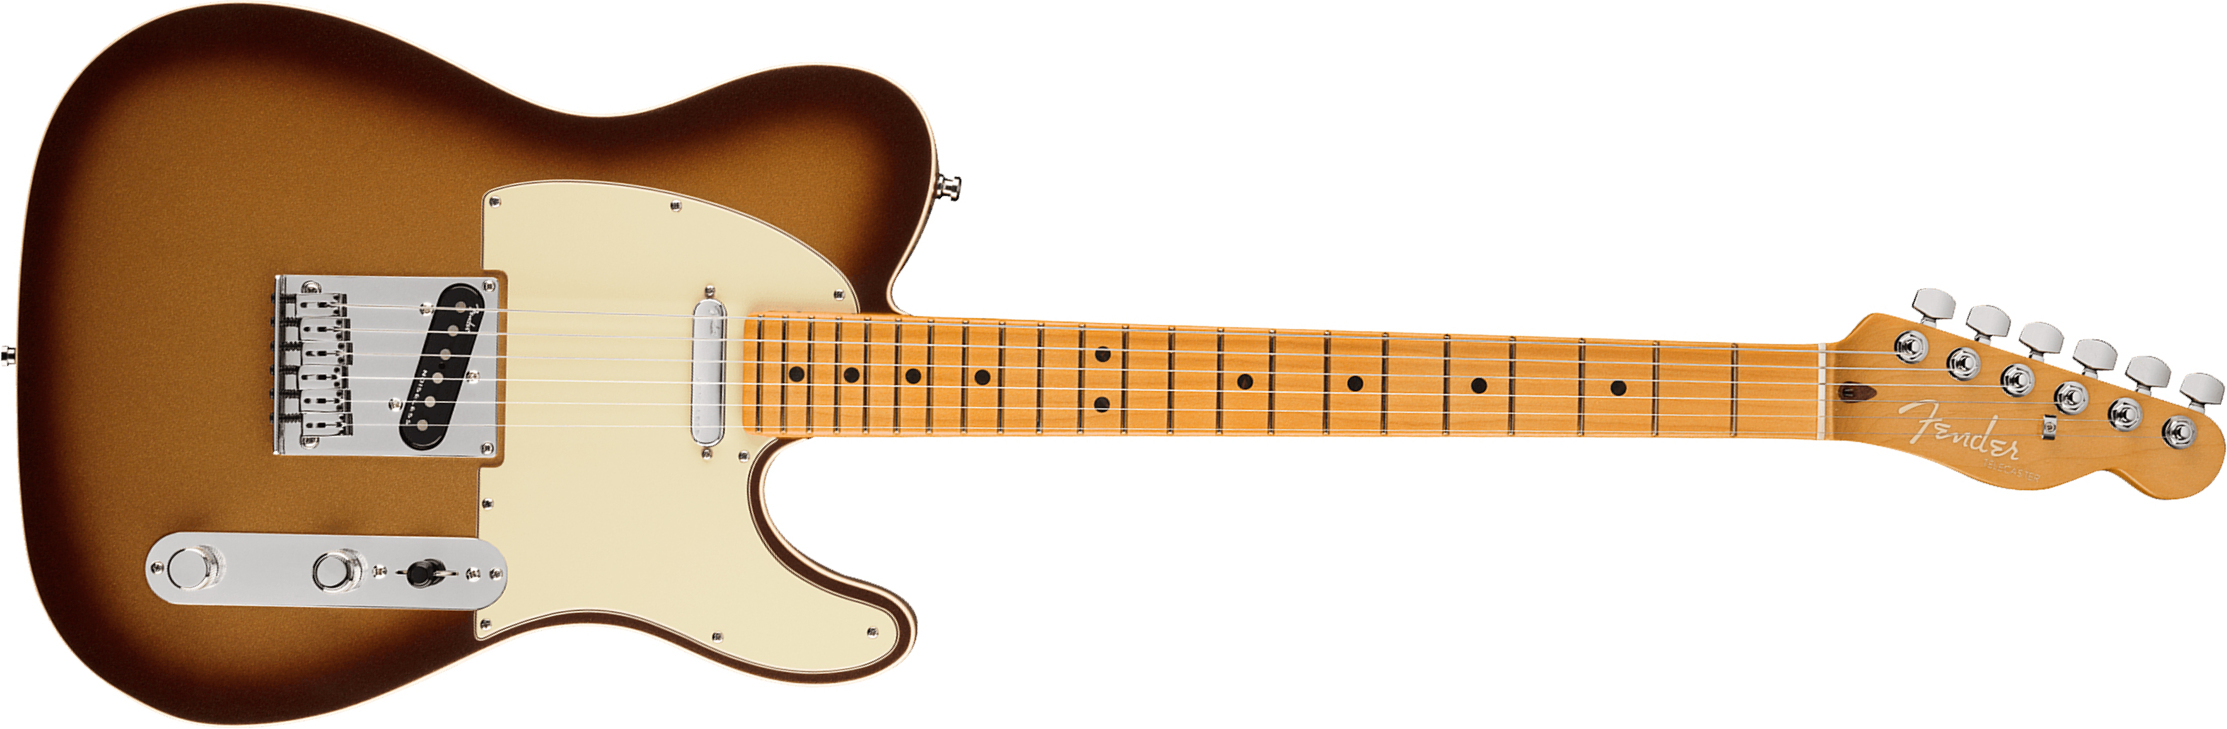 Fender Tele American Ultra 2019 Usa Mn - Mocha Burst - Guitare Électrique Forme Tel - Main picture